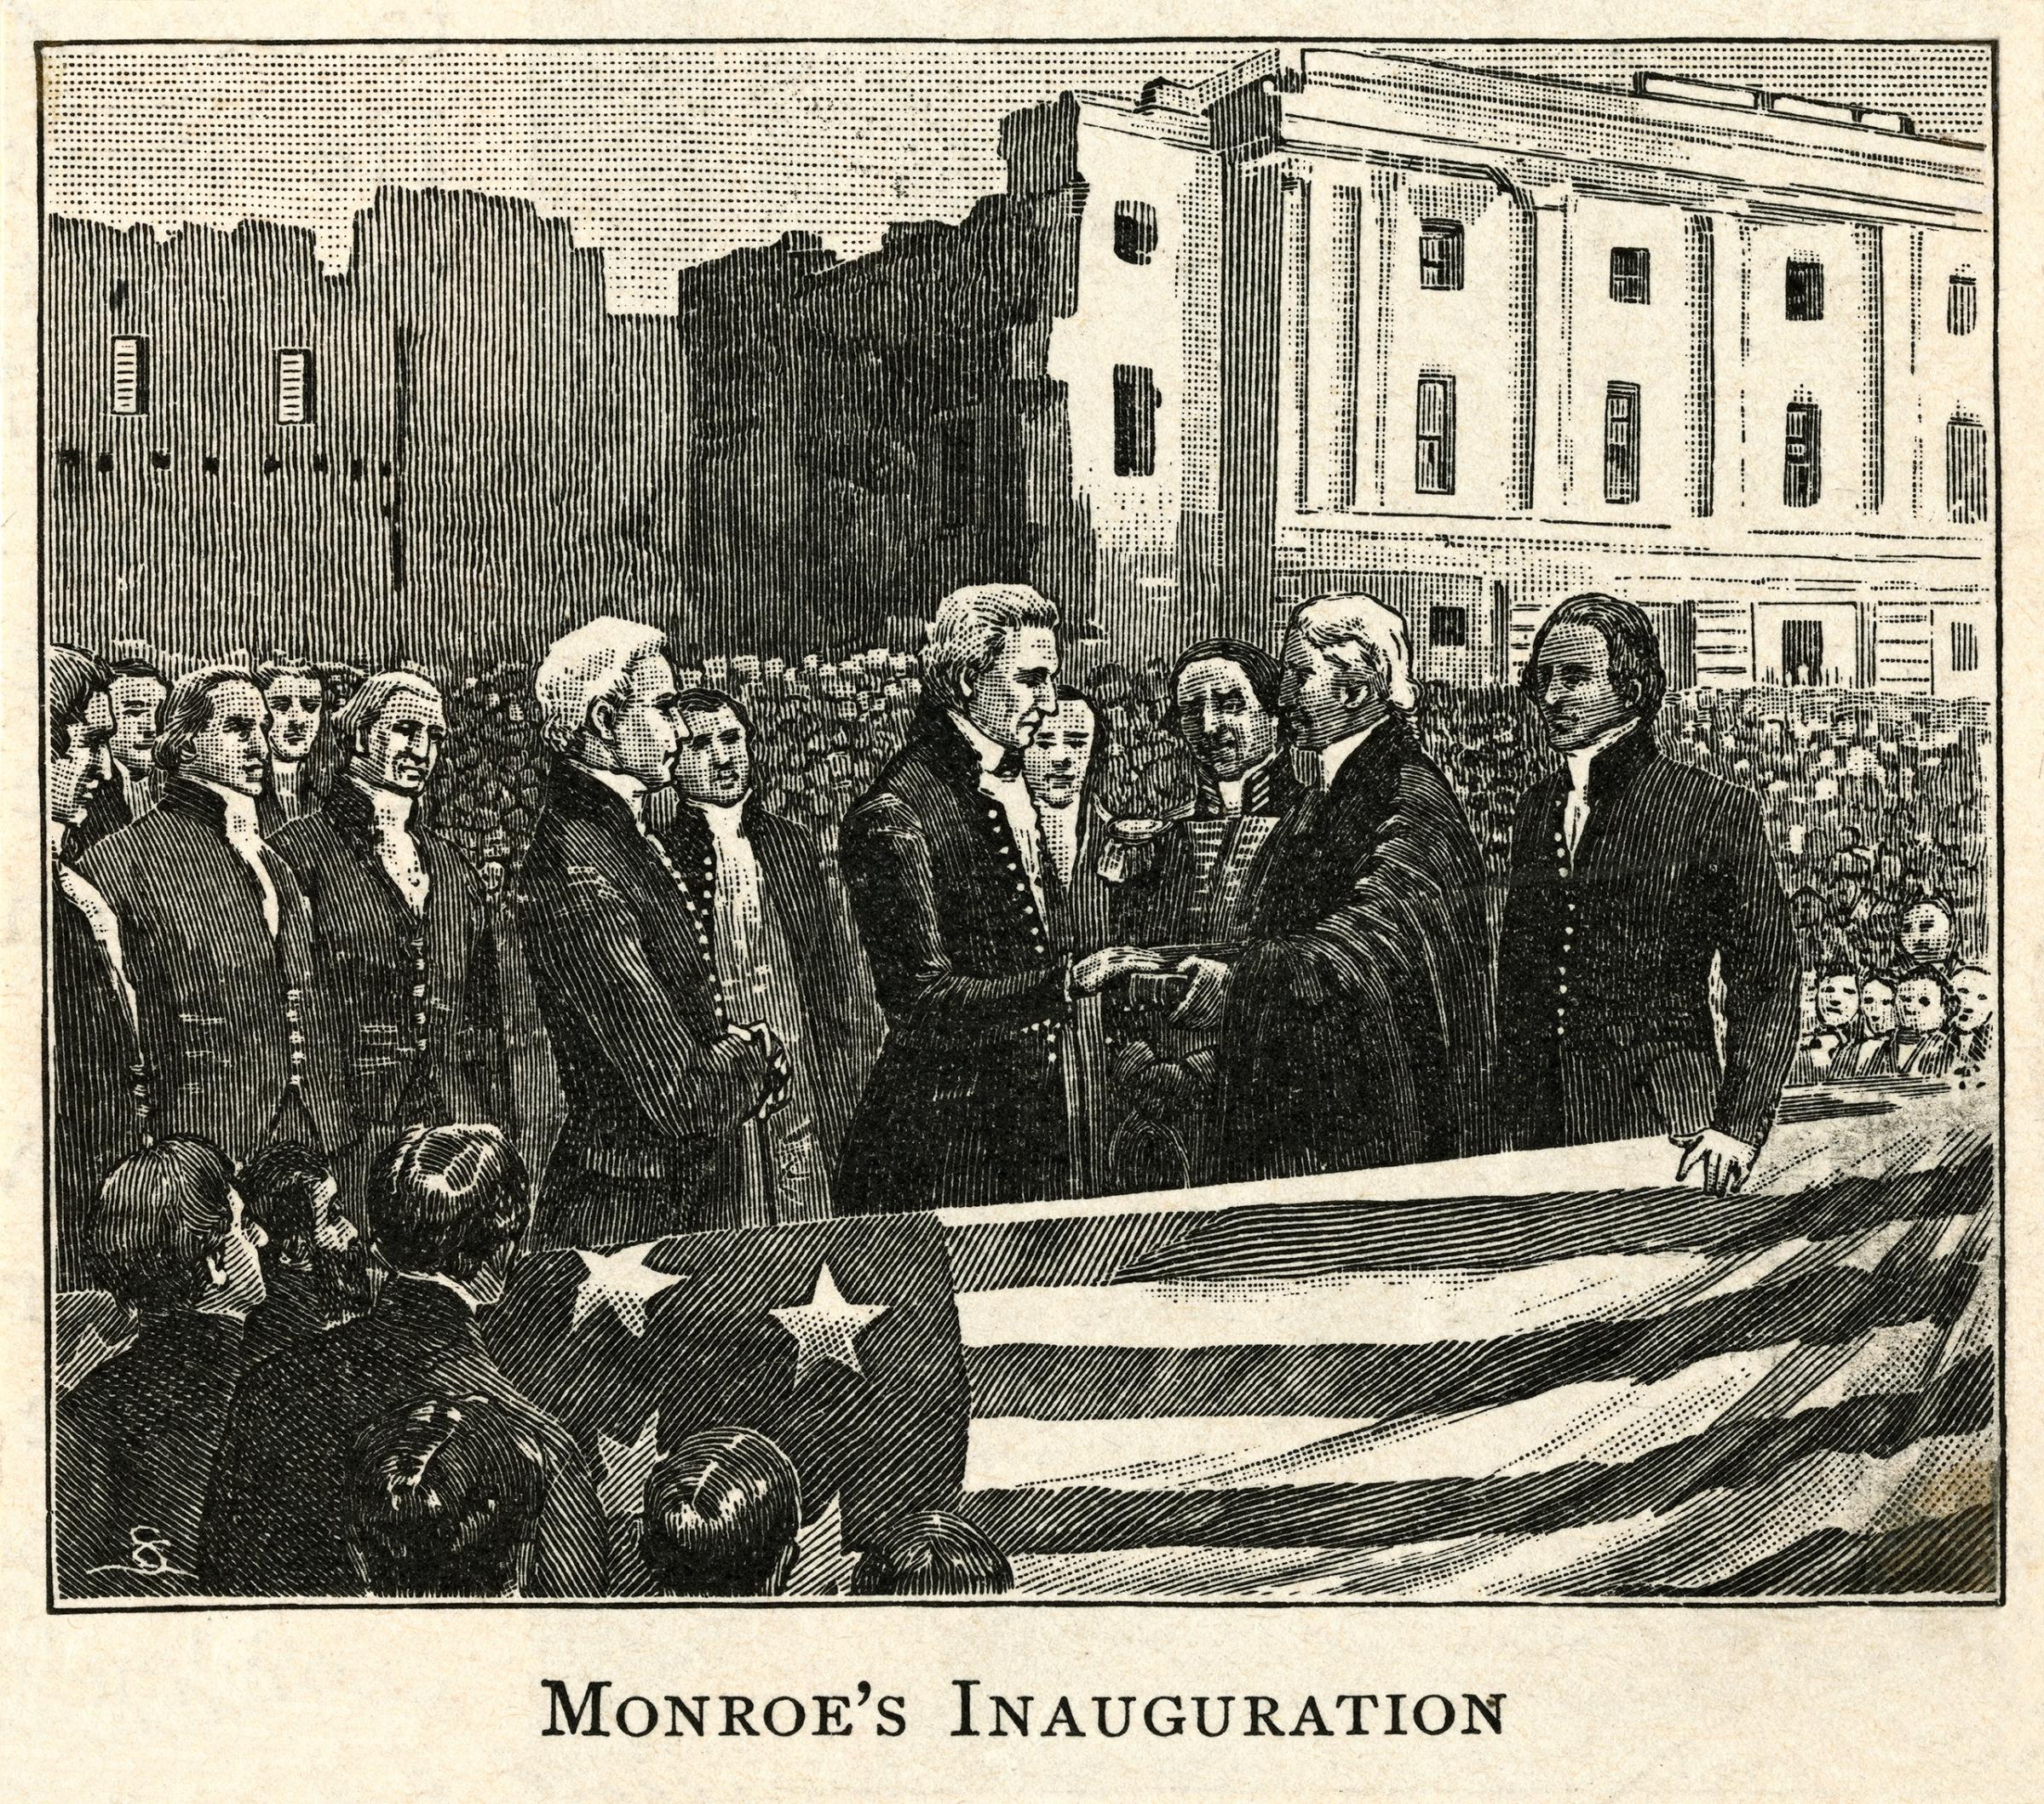 James Monroe's Inauguration as U.S. fifth President, 1817.